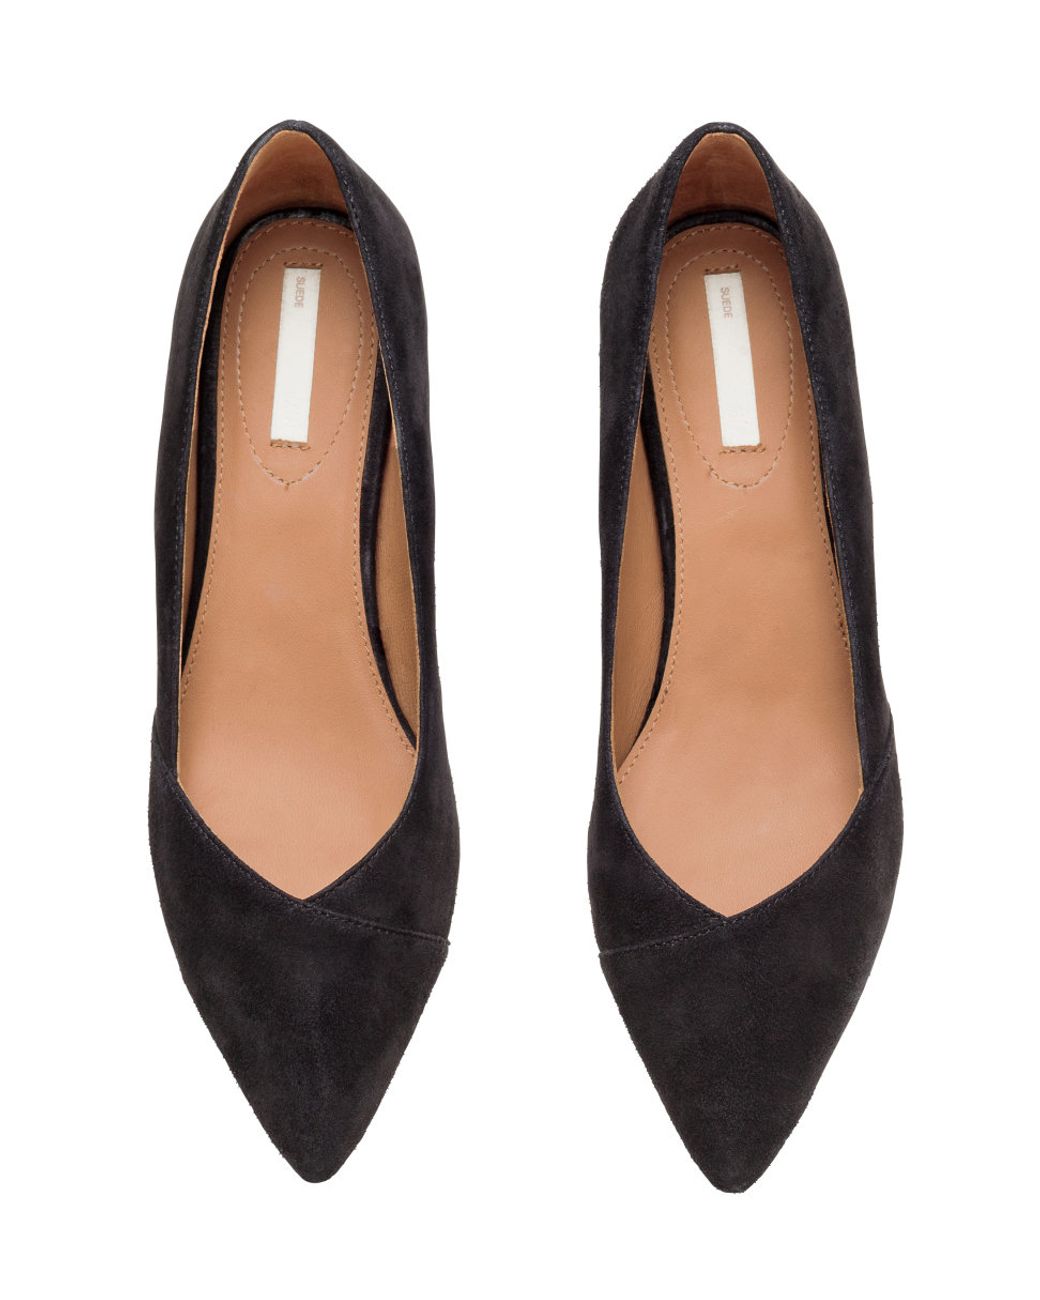 H&M Suede Kitten-heel Court Shoes in Black | Lyst UK